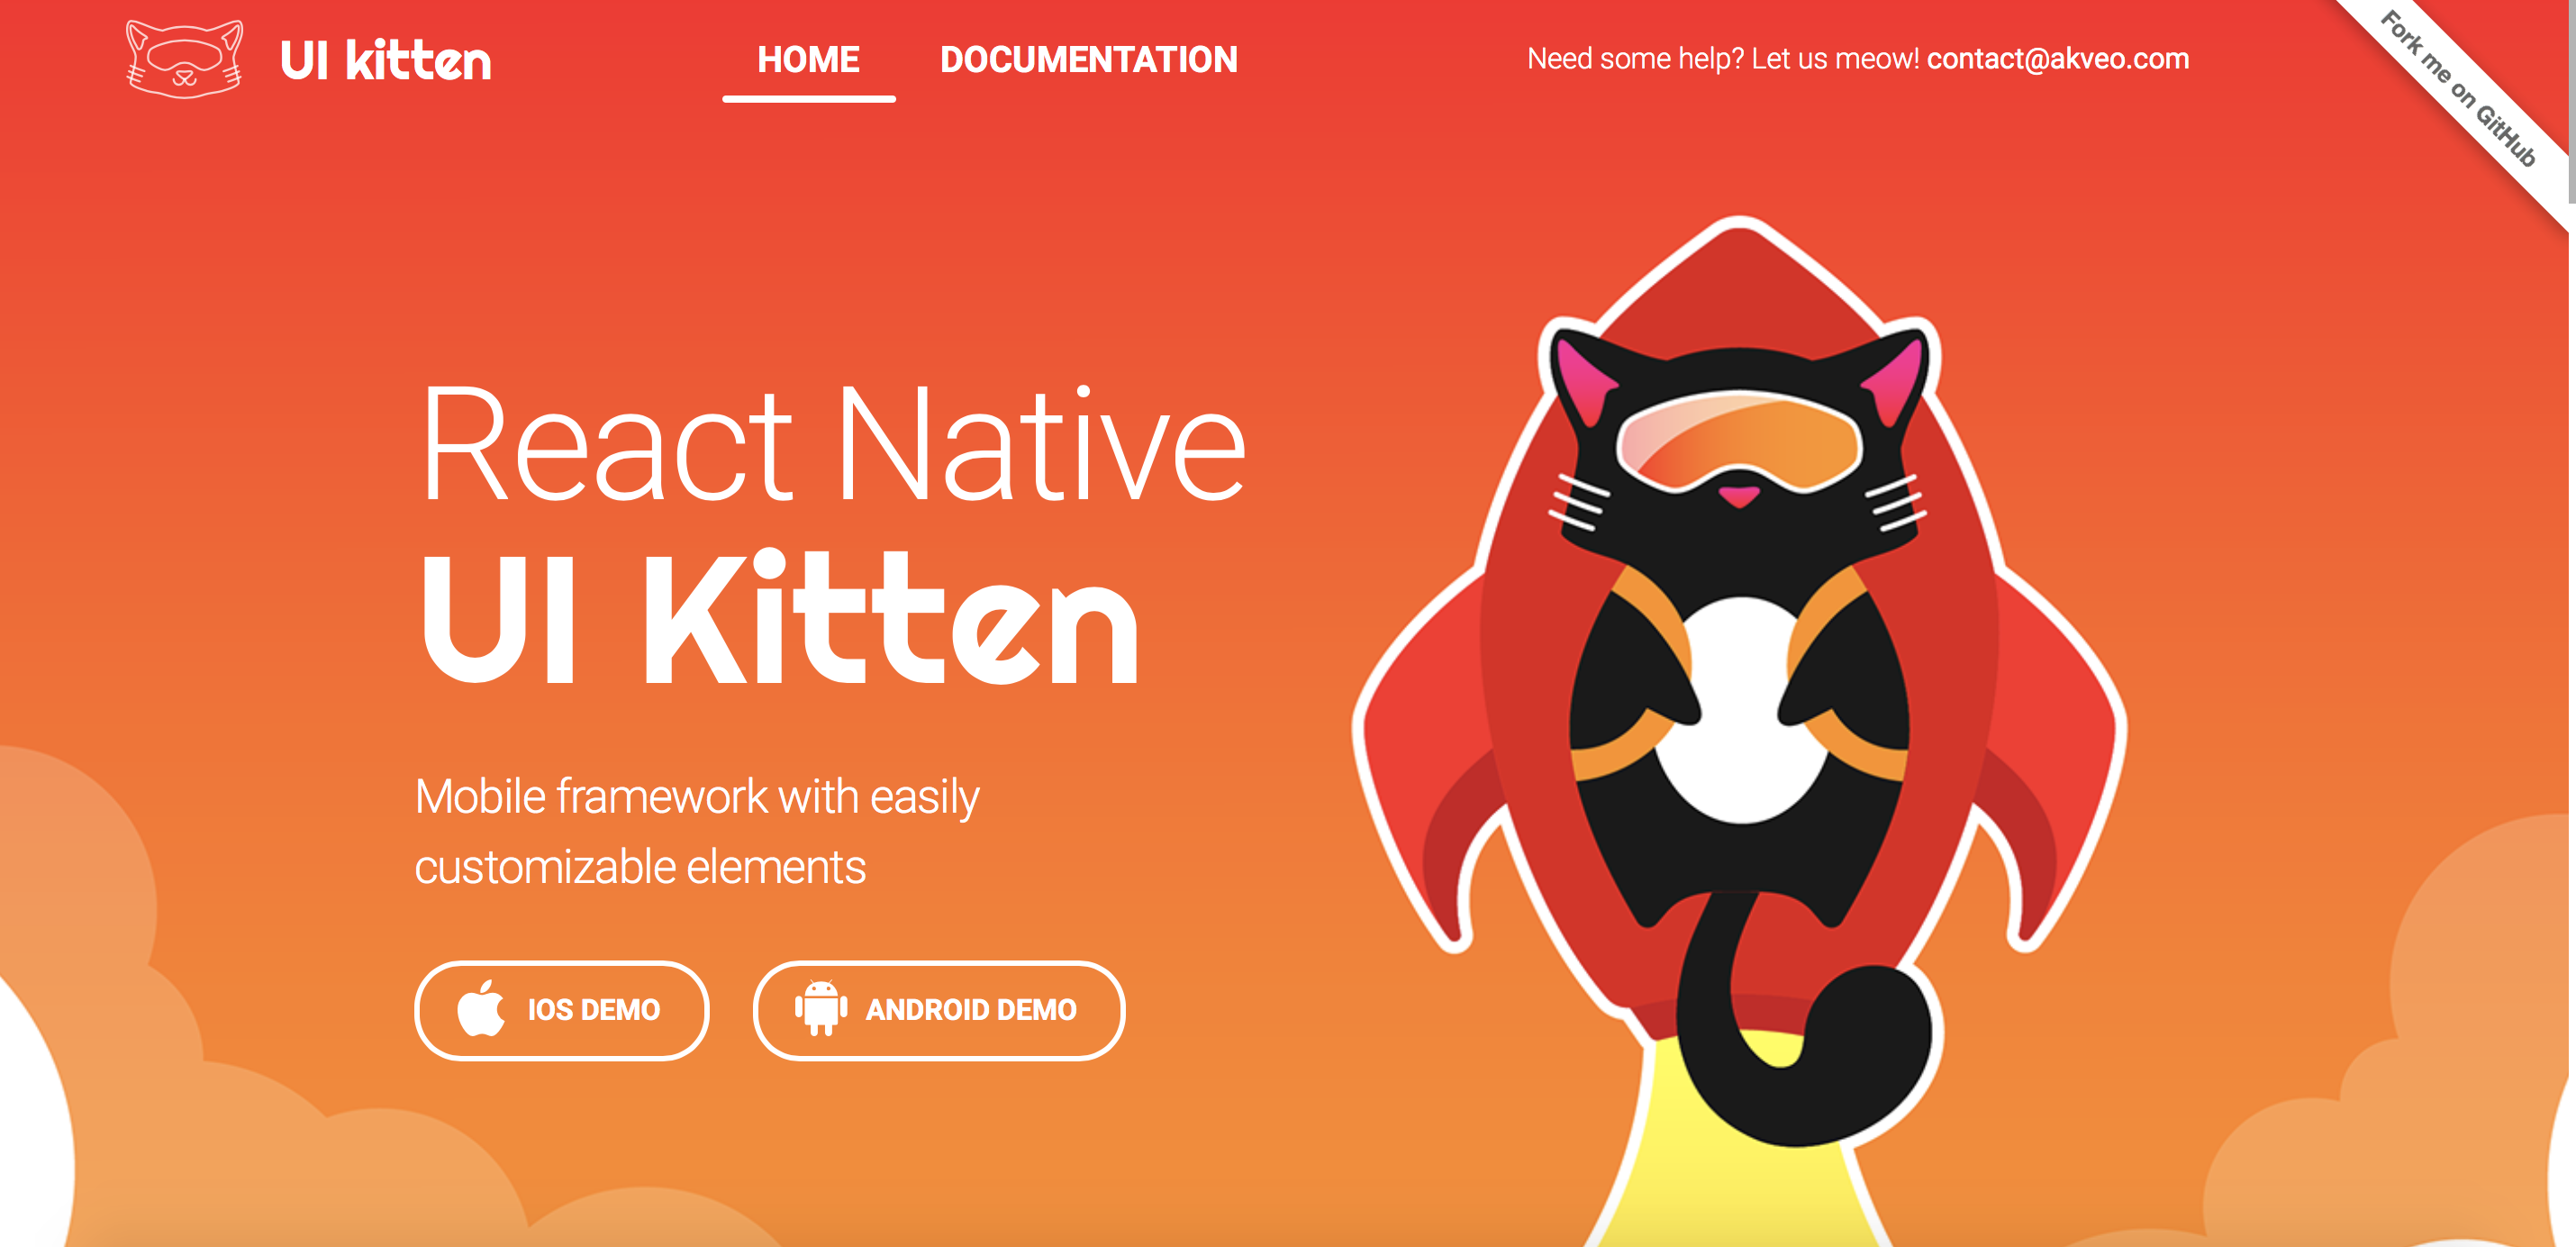 React Native UI Kitten - React